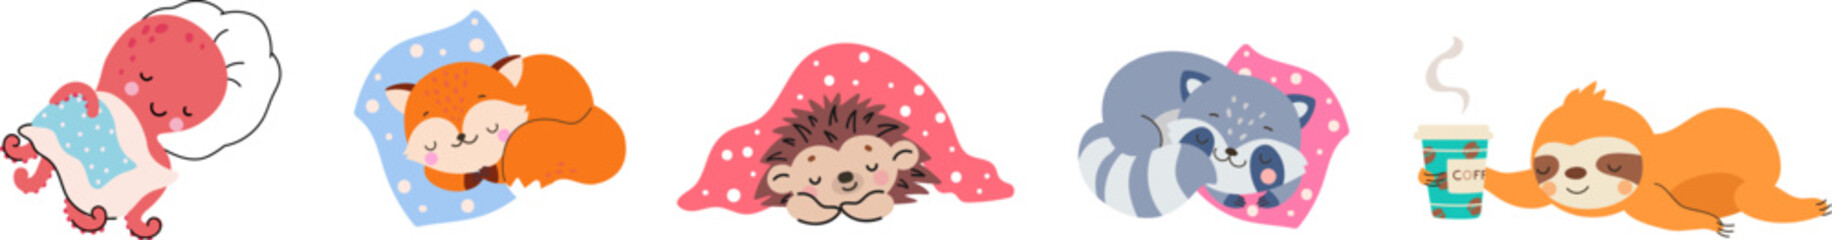 Cartoon animals sleep. Sleeping wild animal, fox and raccoon, octopus and sloth. Cute hedgehog rest, dreaming baby vector characters